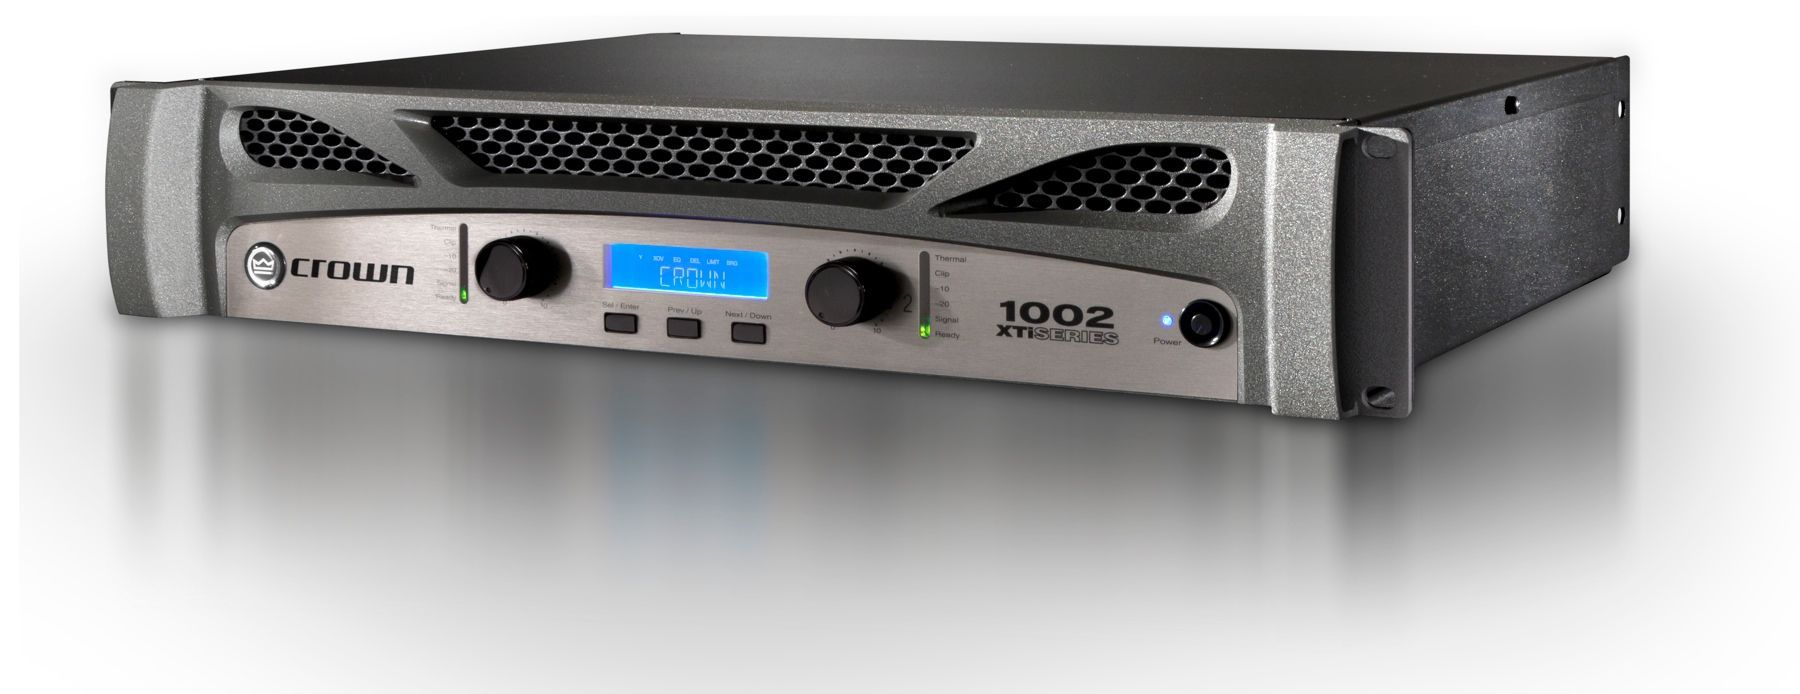 Crown XTI 1002 Endstufe mit digitalem Signalprozessor 1000 Watt Verstärker